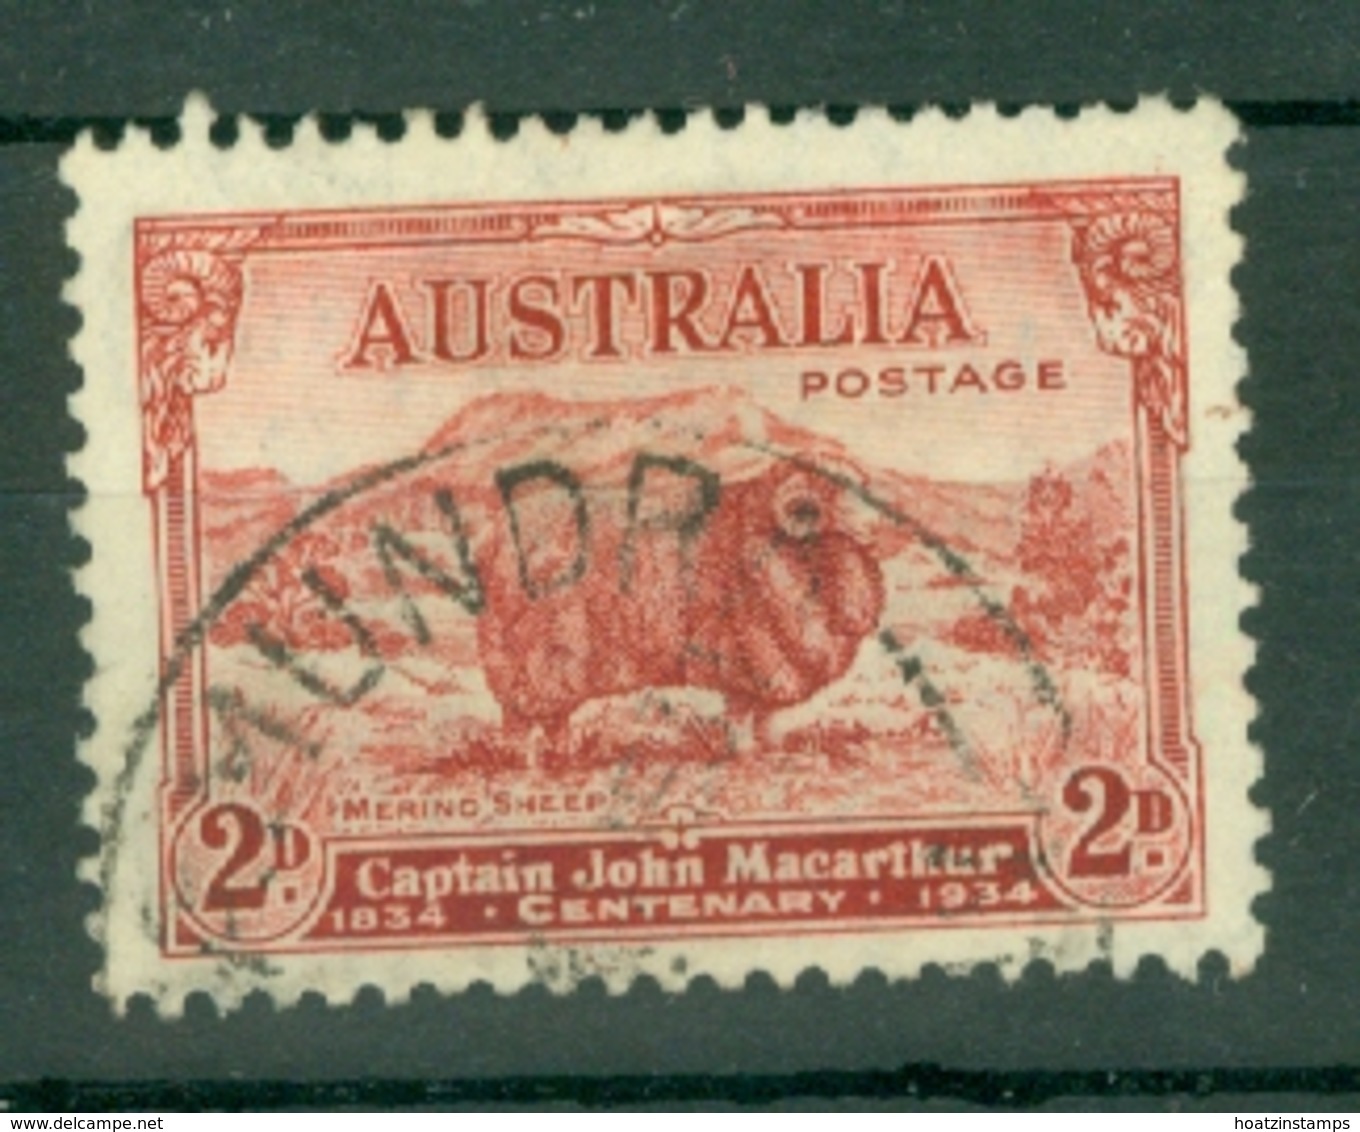 Australia: 1934   Death Centenary Of Capt John Macarthur    SG150     2d      Used - Used Stamps